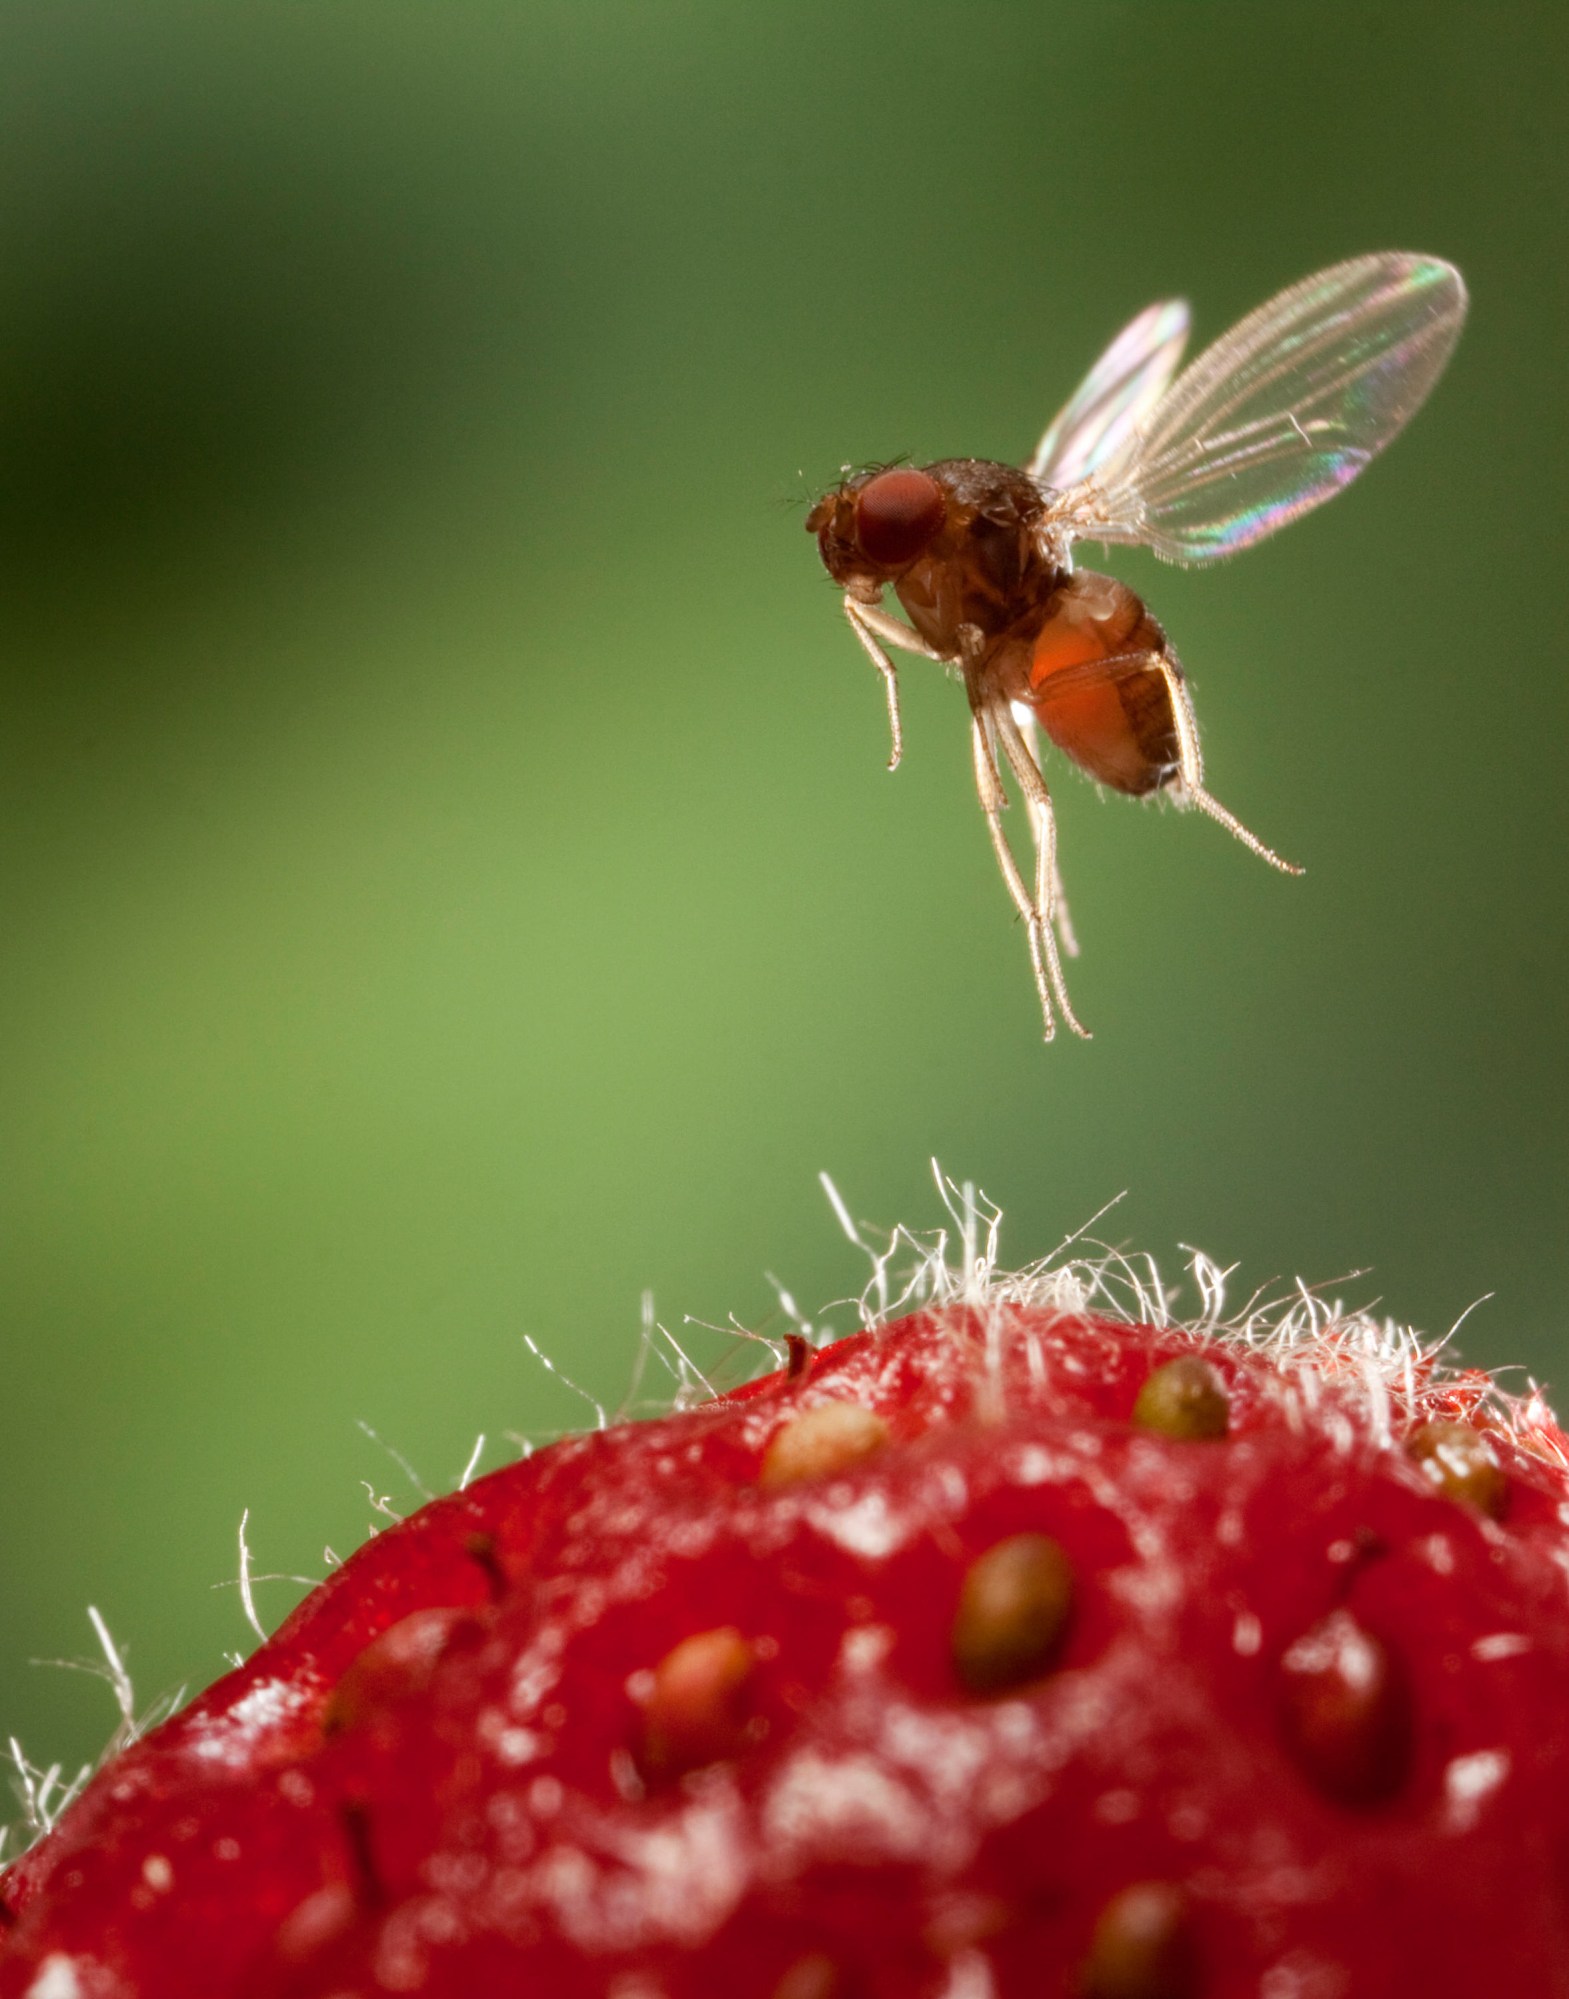 Female Spotted wing fruit fly (Drosophila suzukii) in flight over a strawberry.